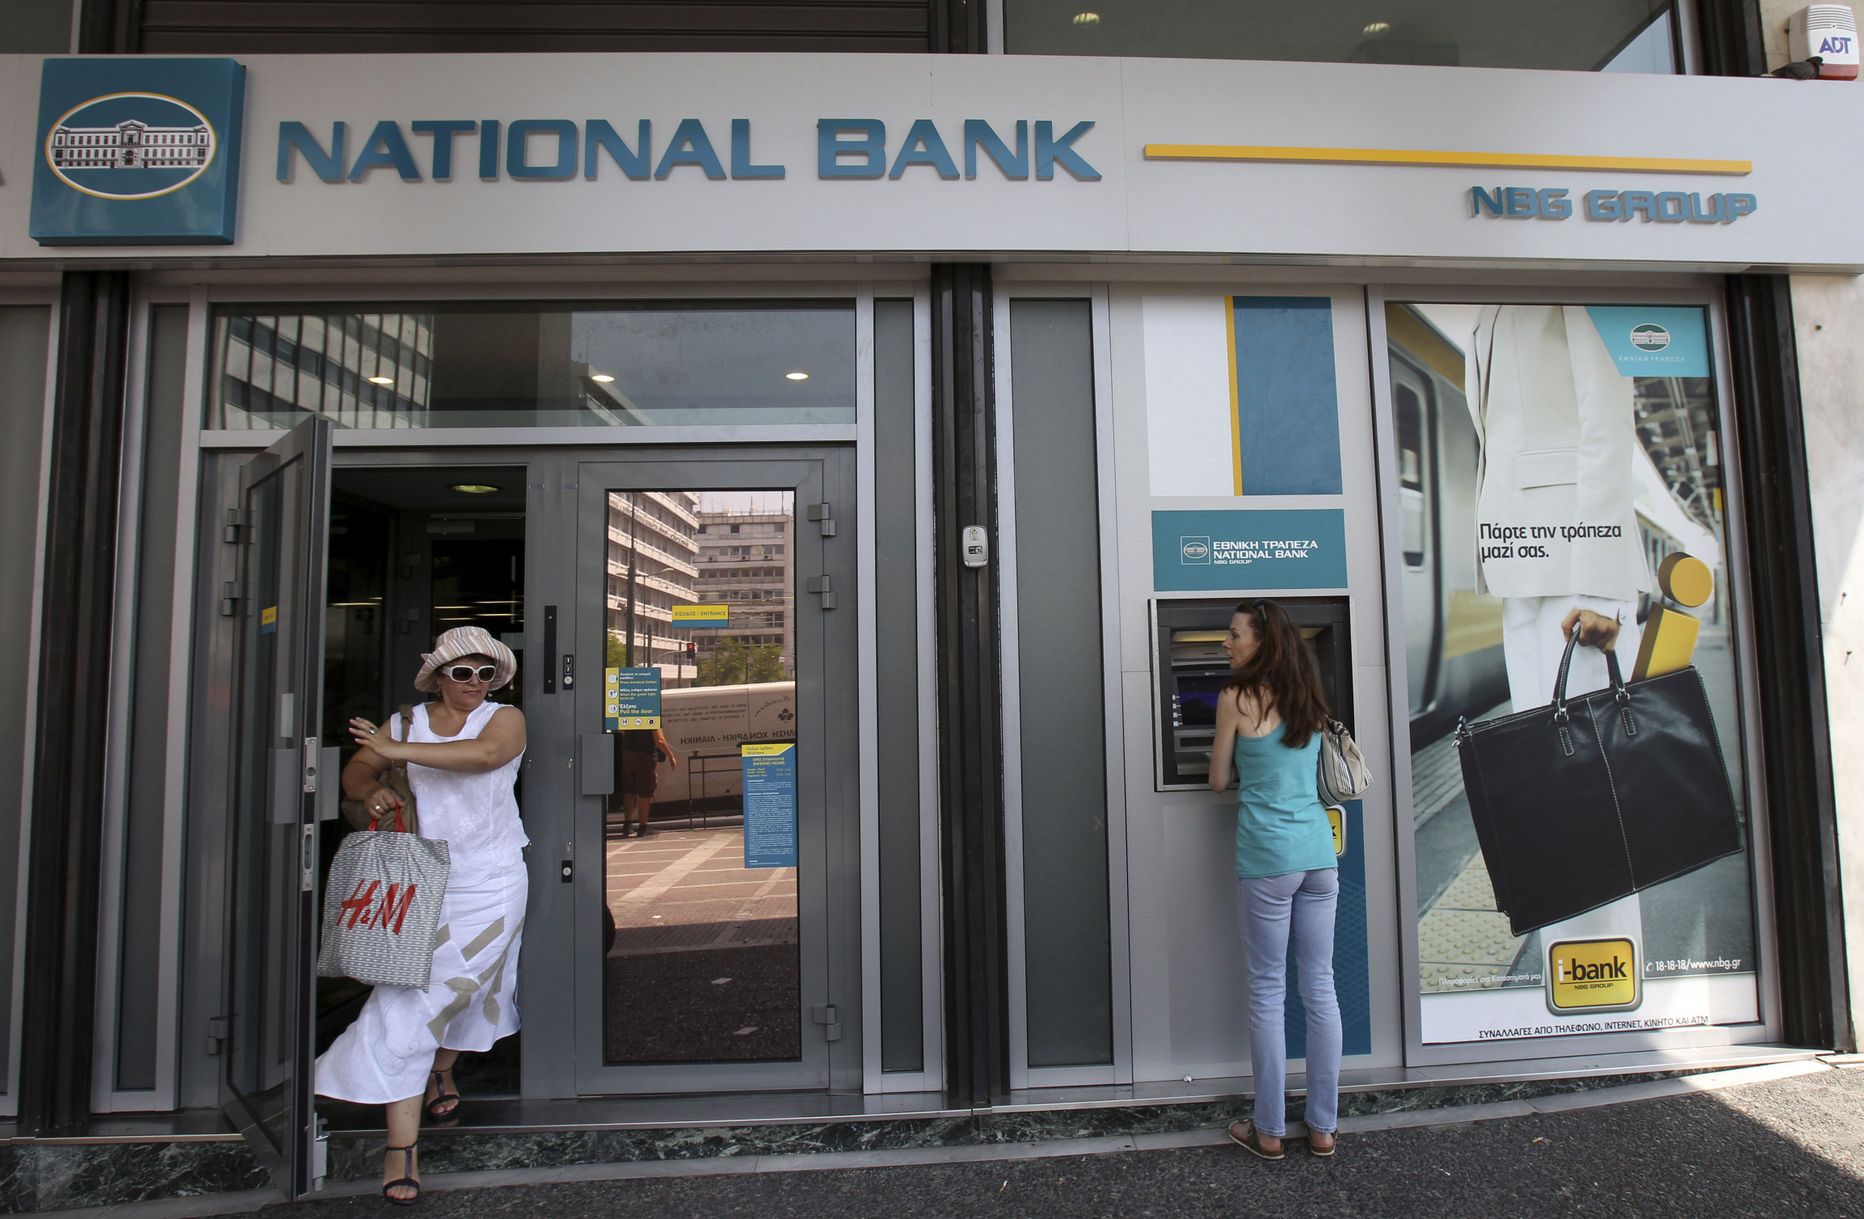 National Bank of Greece'i kontor Ateenas.